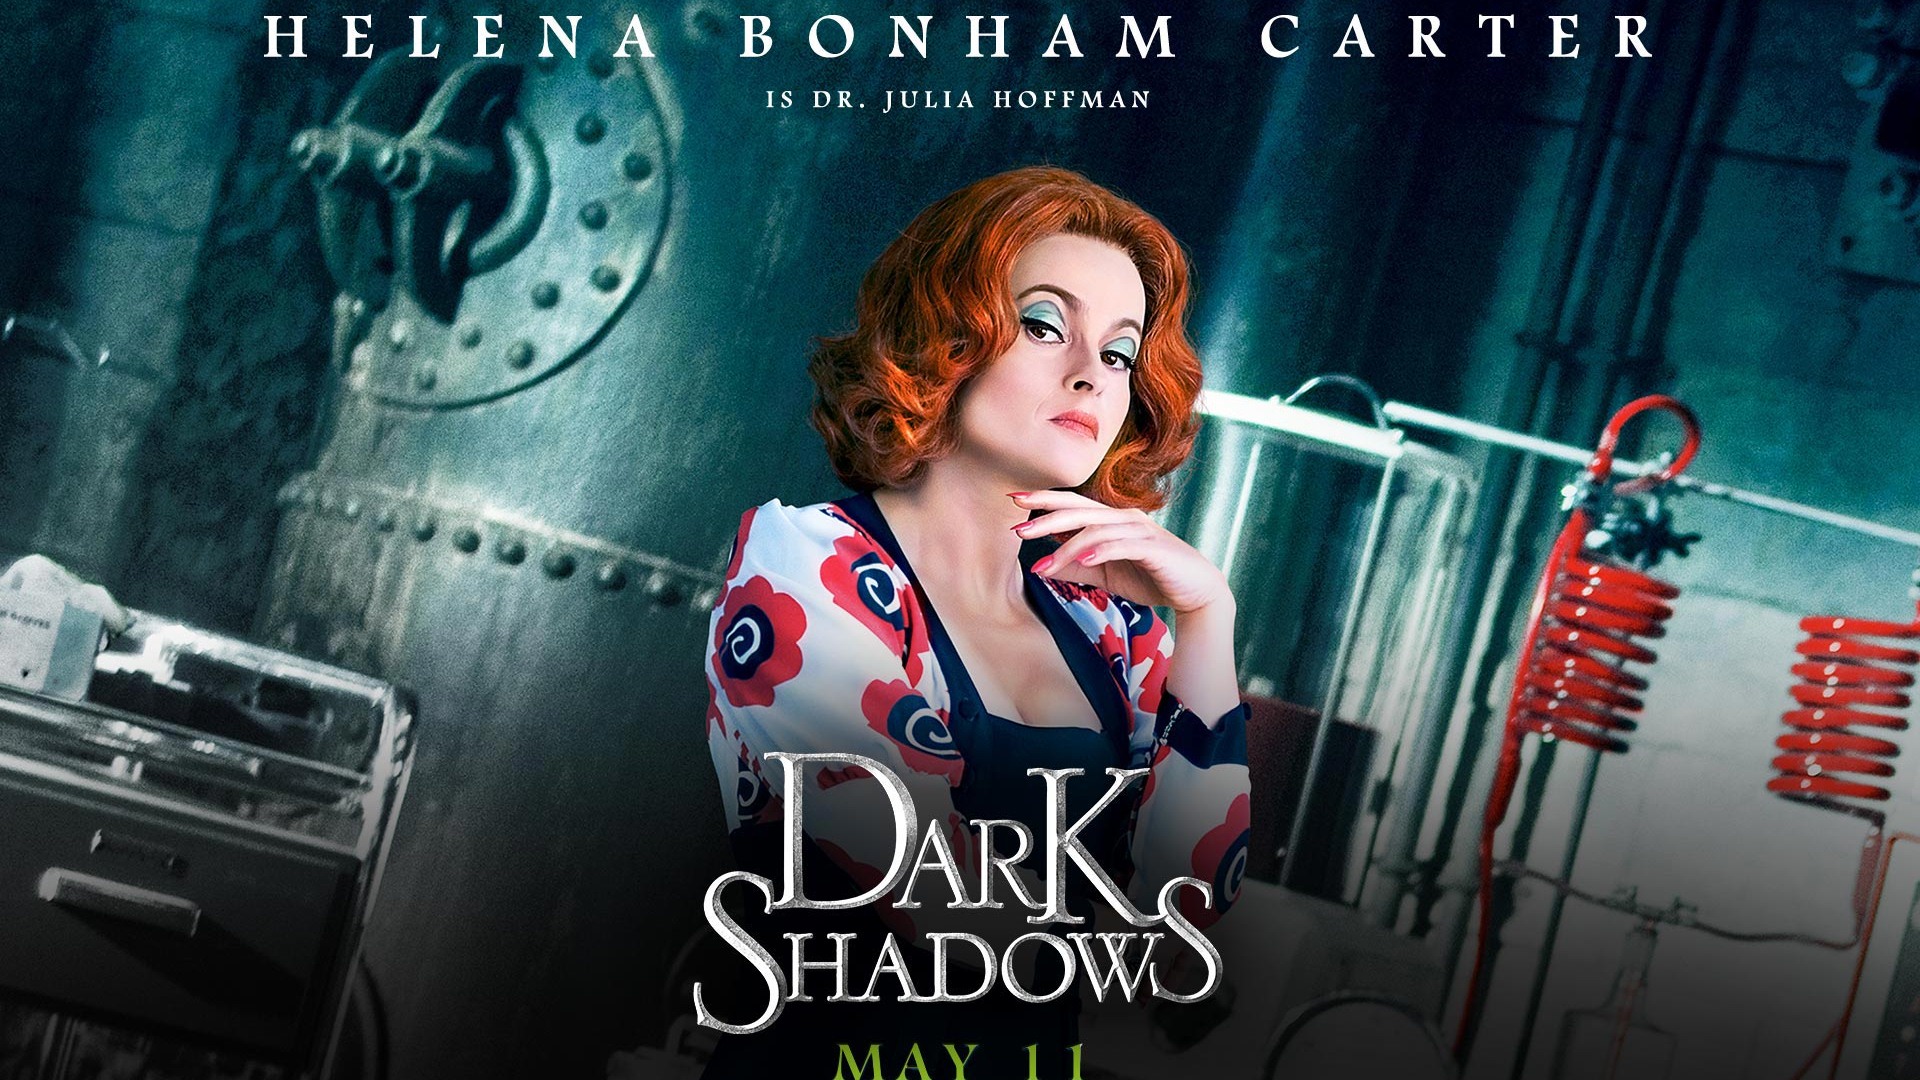 Helena Bonham Carter in Dark Shadows 2012 movie wallpaper - 1920x1080